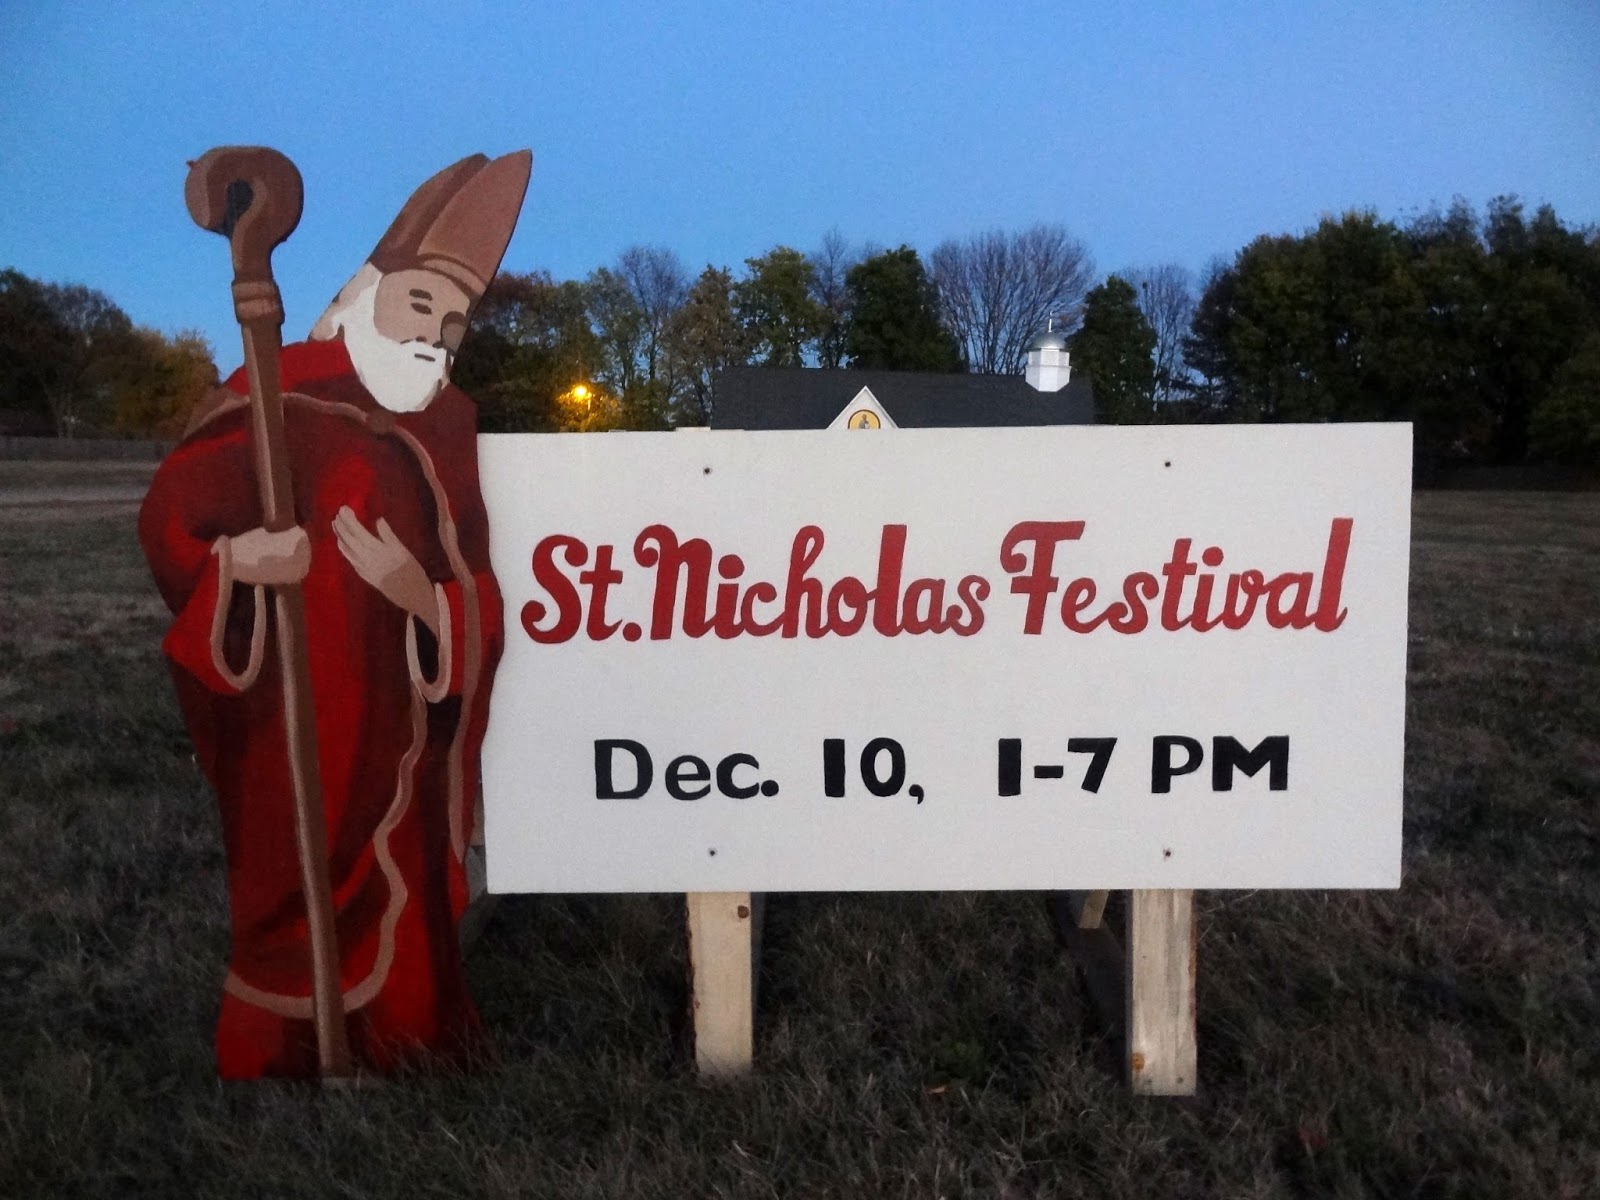 St. Nicholas Festival!